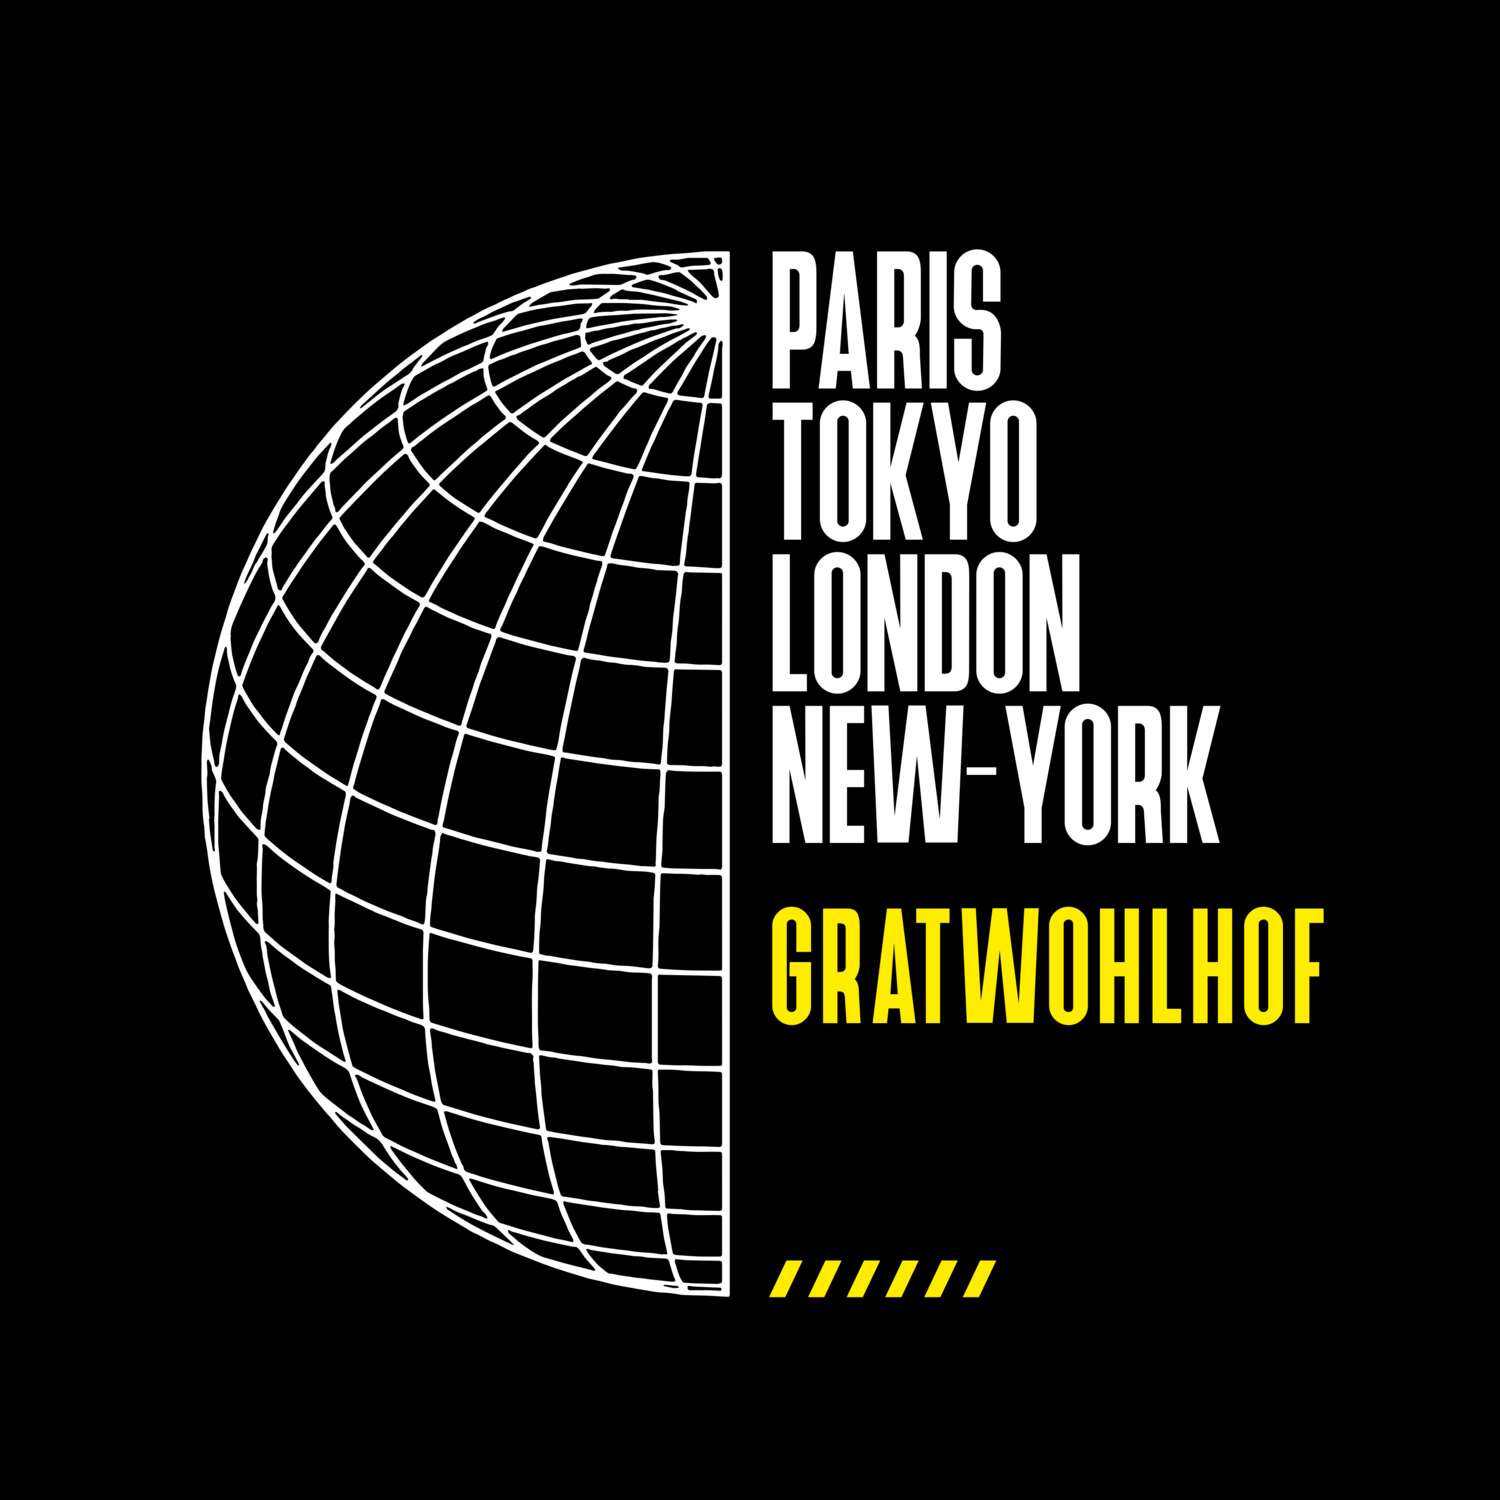 Gratwohlhof T-Shirt »Paris Tokyo London«